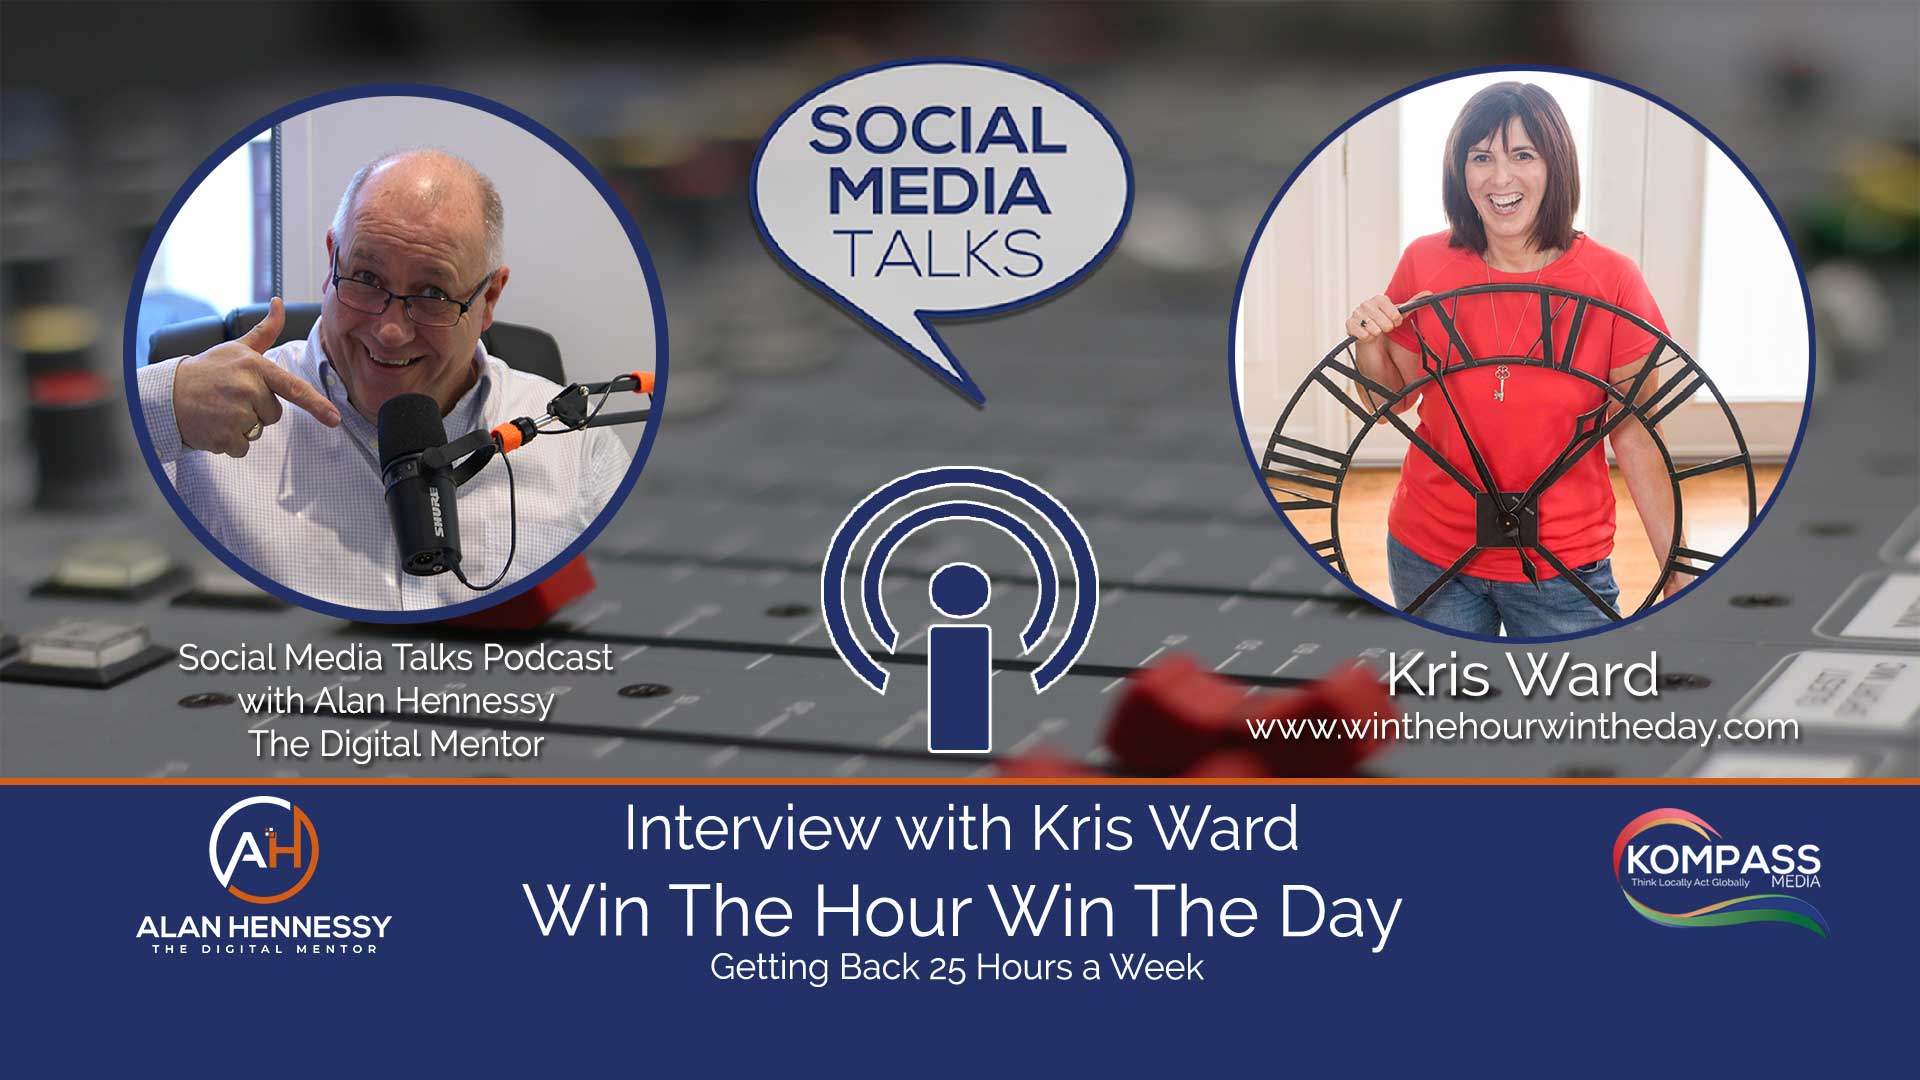 Social Media Talks Podcast Interview with Kris Ward